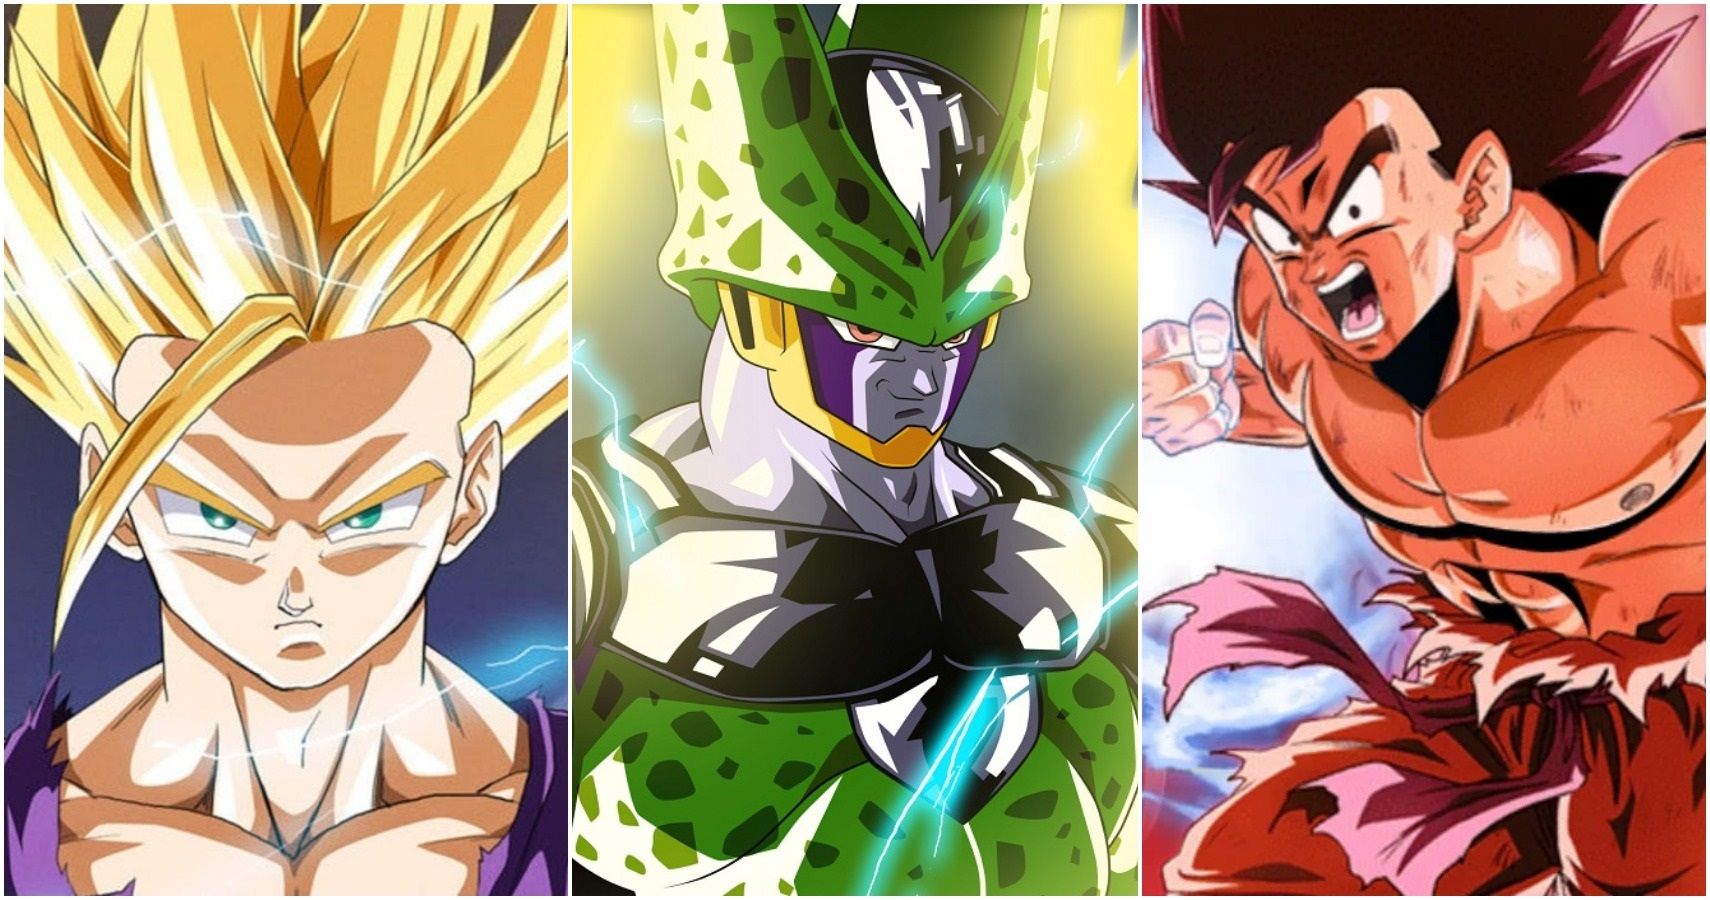 gokuvsfrieza: Dragon Ball Z Characters : Ranking The Most Powerful